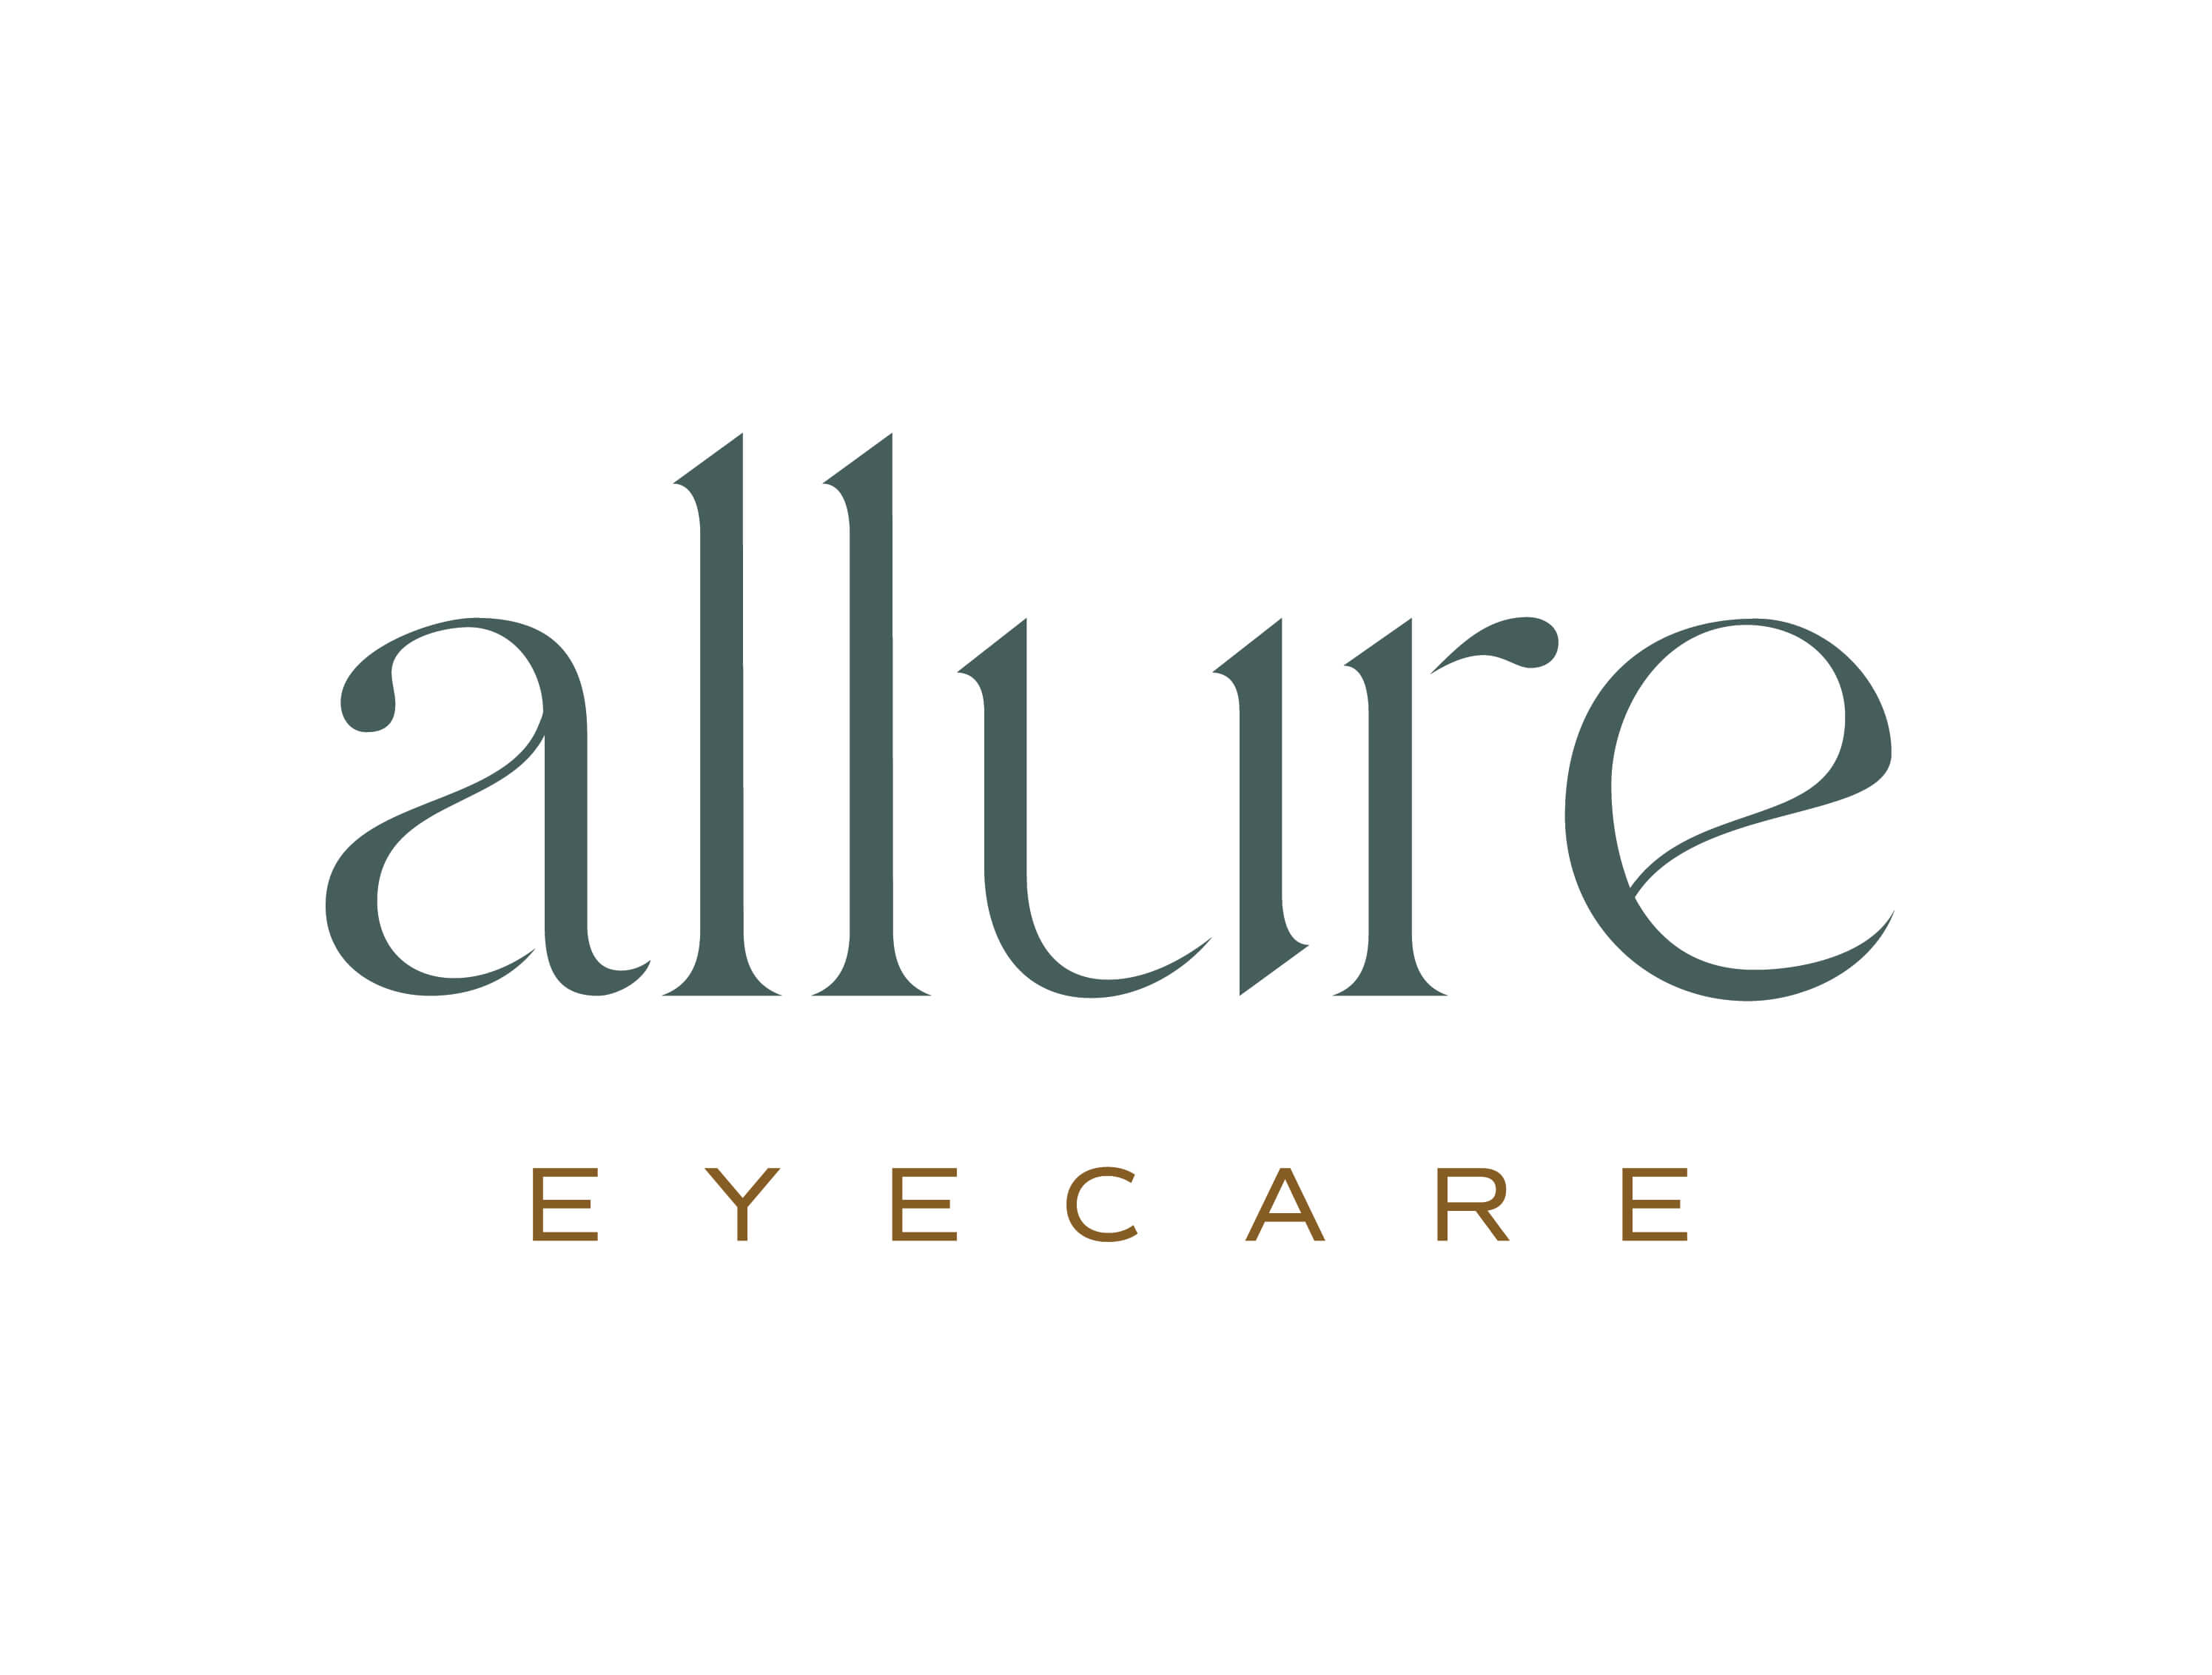 Allure Eyecare